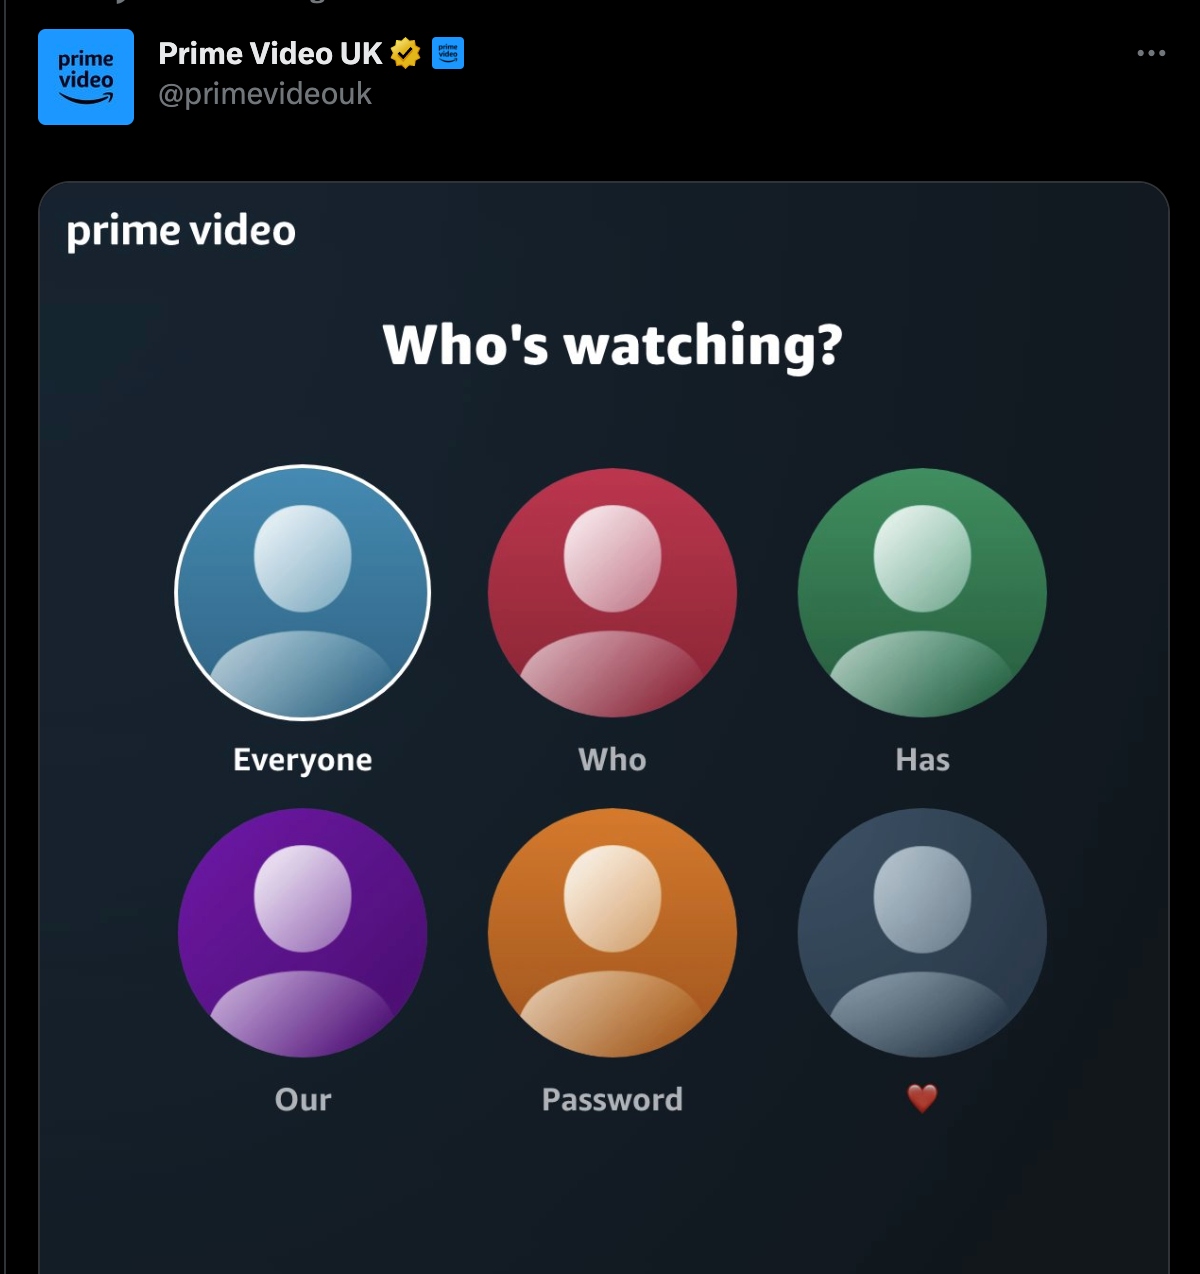 Amazon Prime Video mocks Netflix